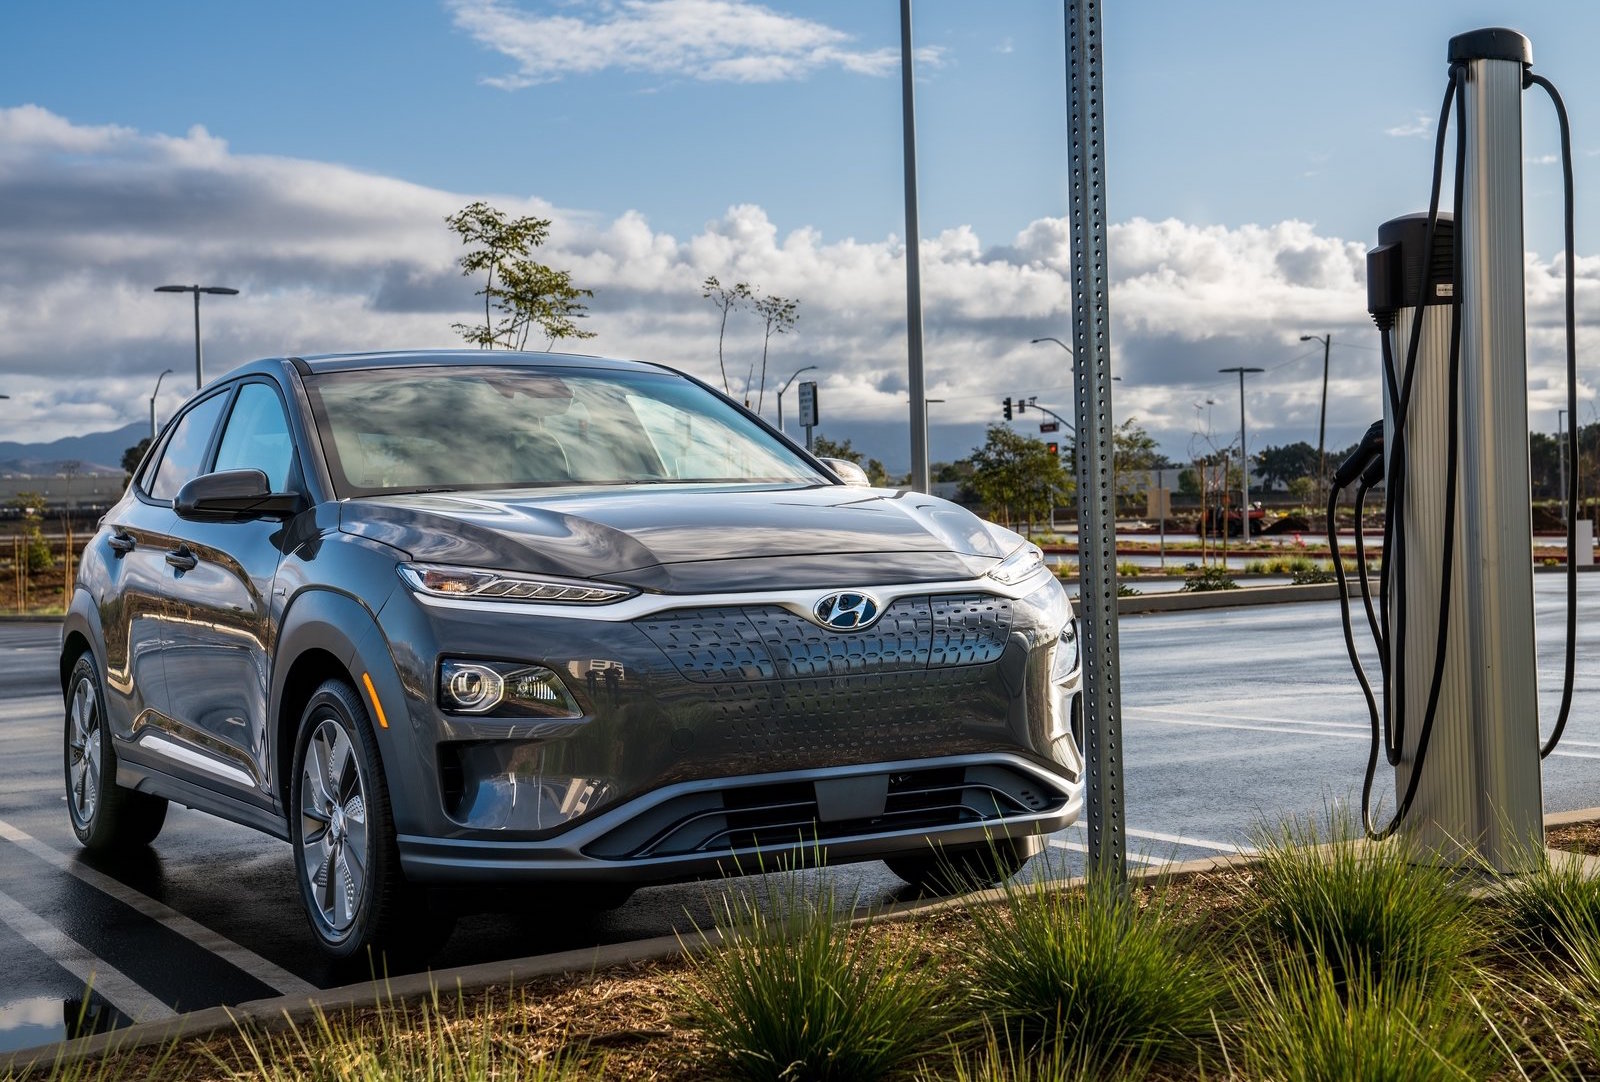 Hyundai Kona Electric surpasses 100,000 global sales milestone